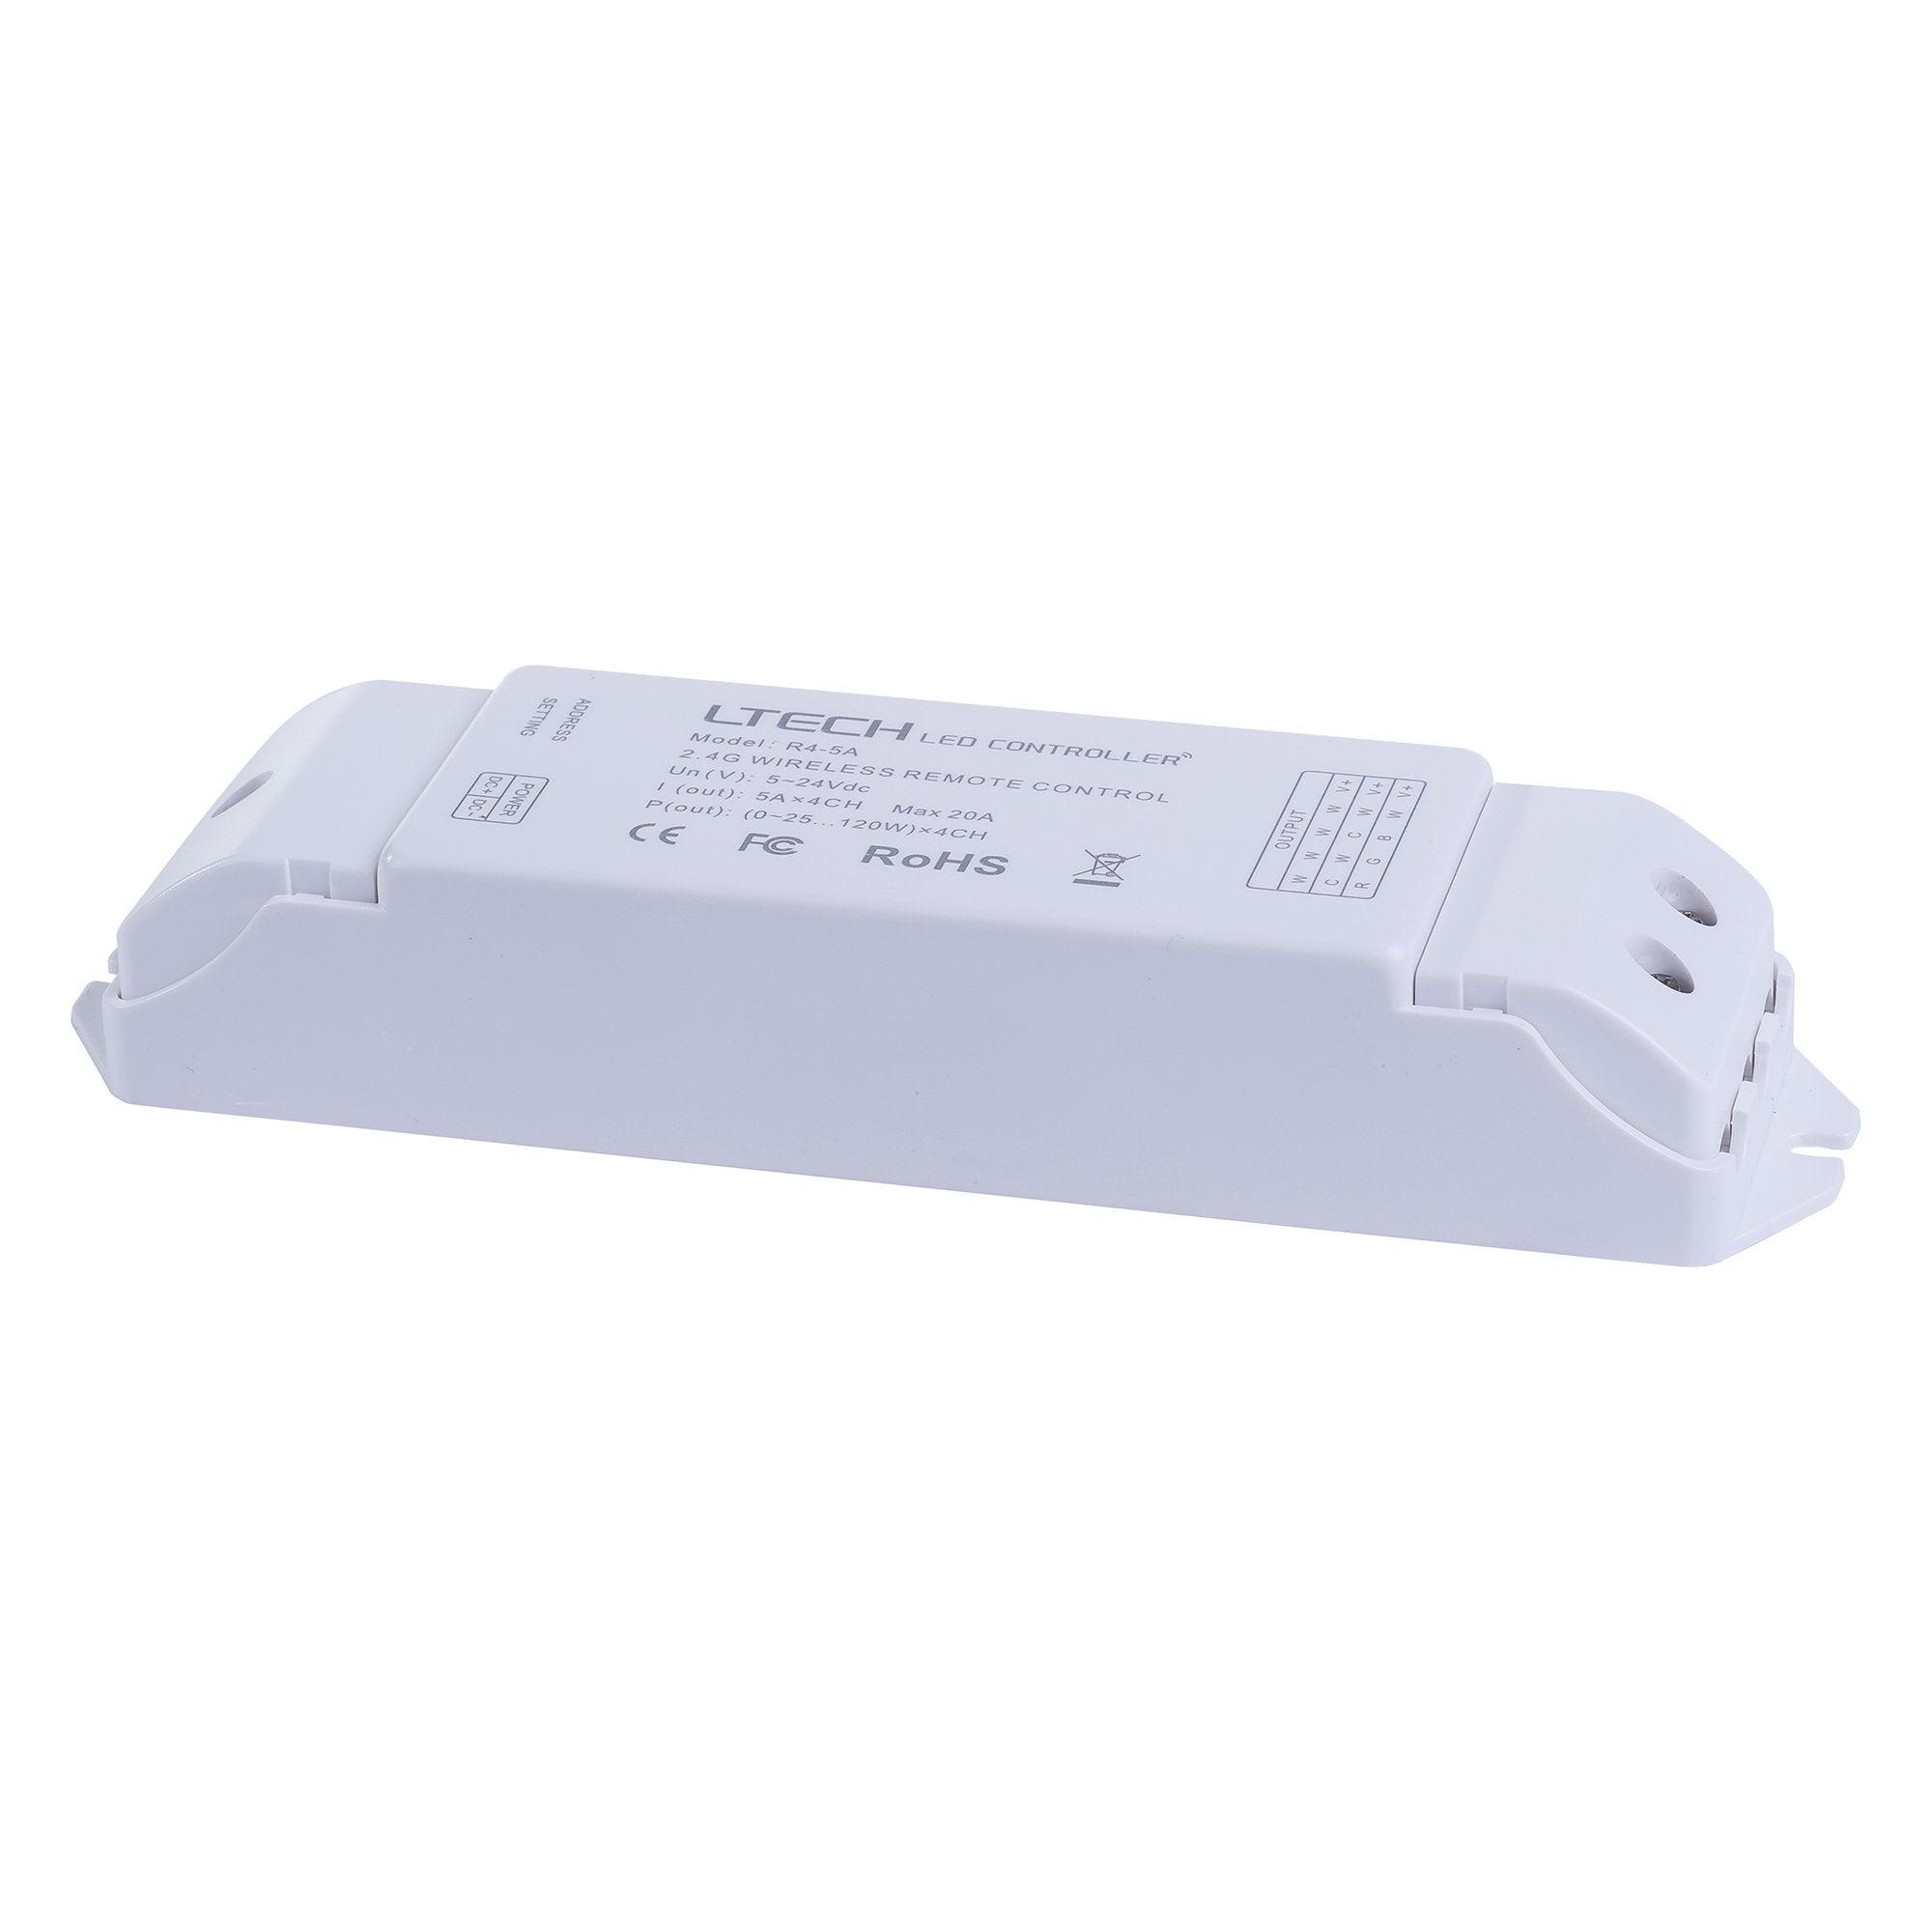 Havit Lighting LED Strip Controllers White LED Strip Receiver by Havit Lighting - HV9103-R4-5A Lights-For-You HV9103-R4-5A